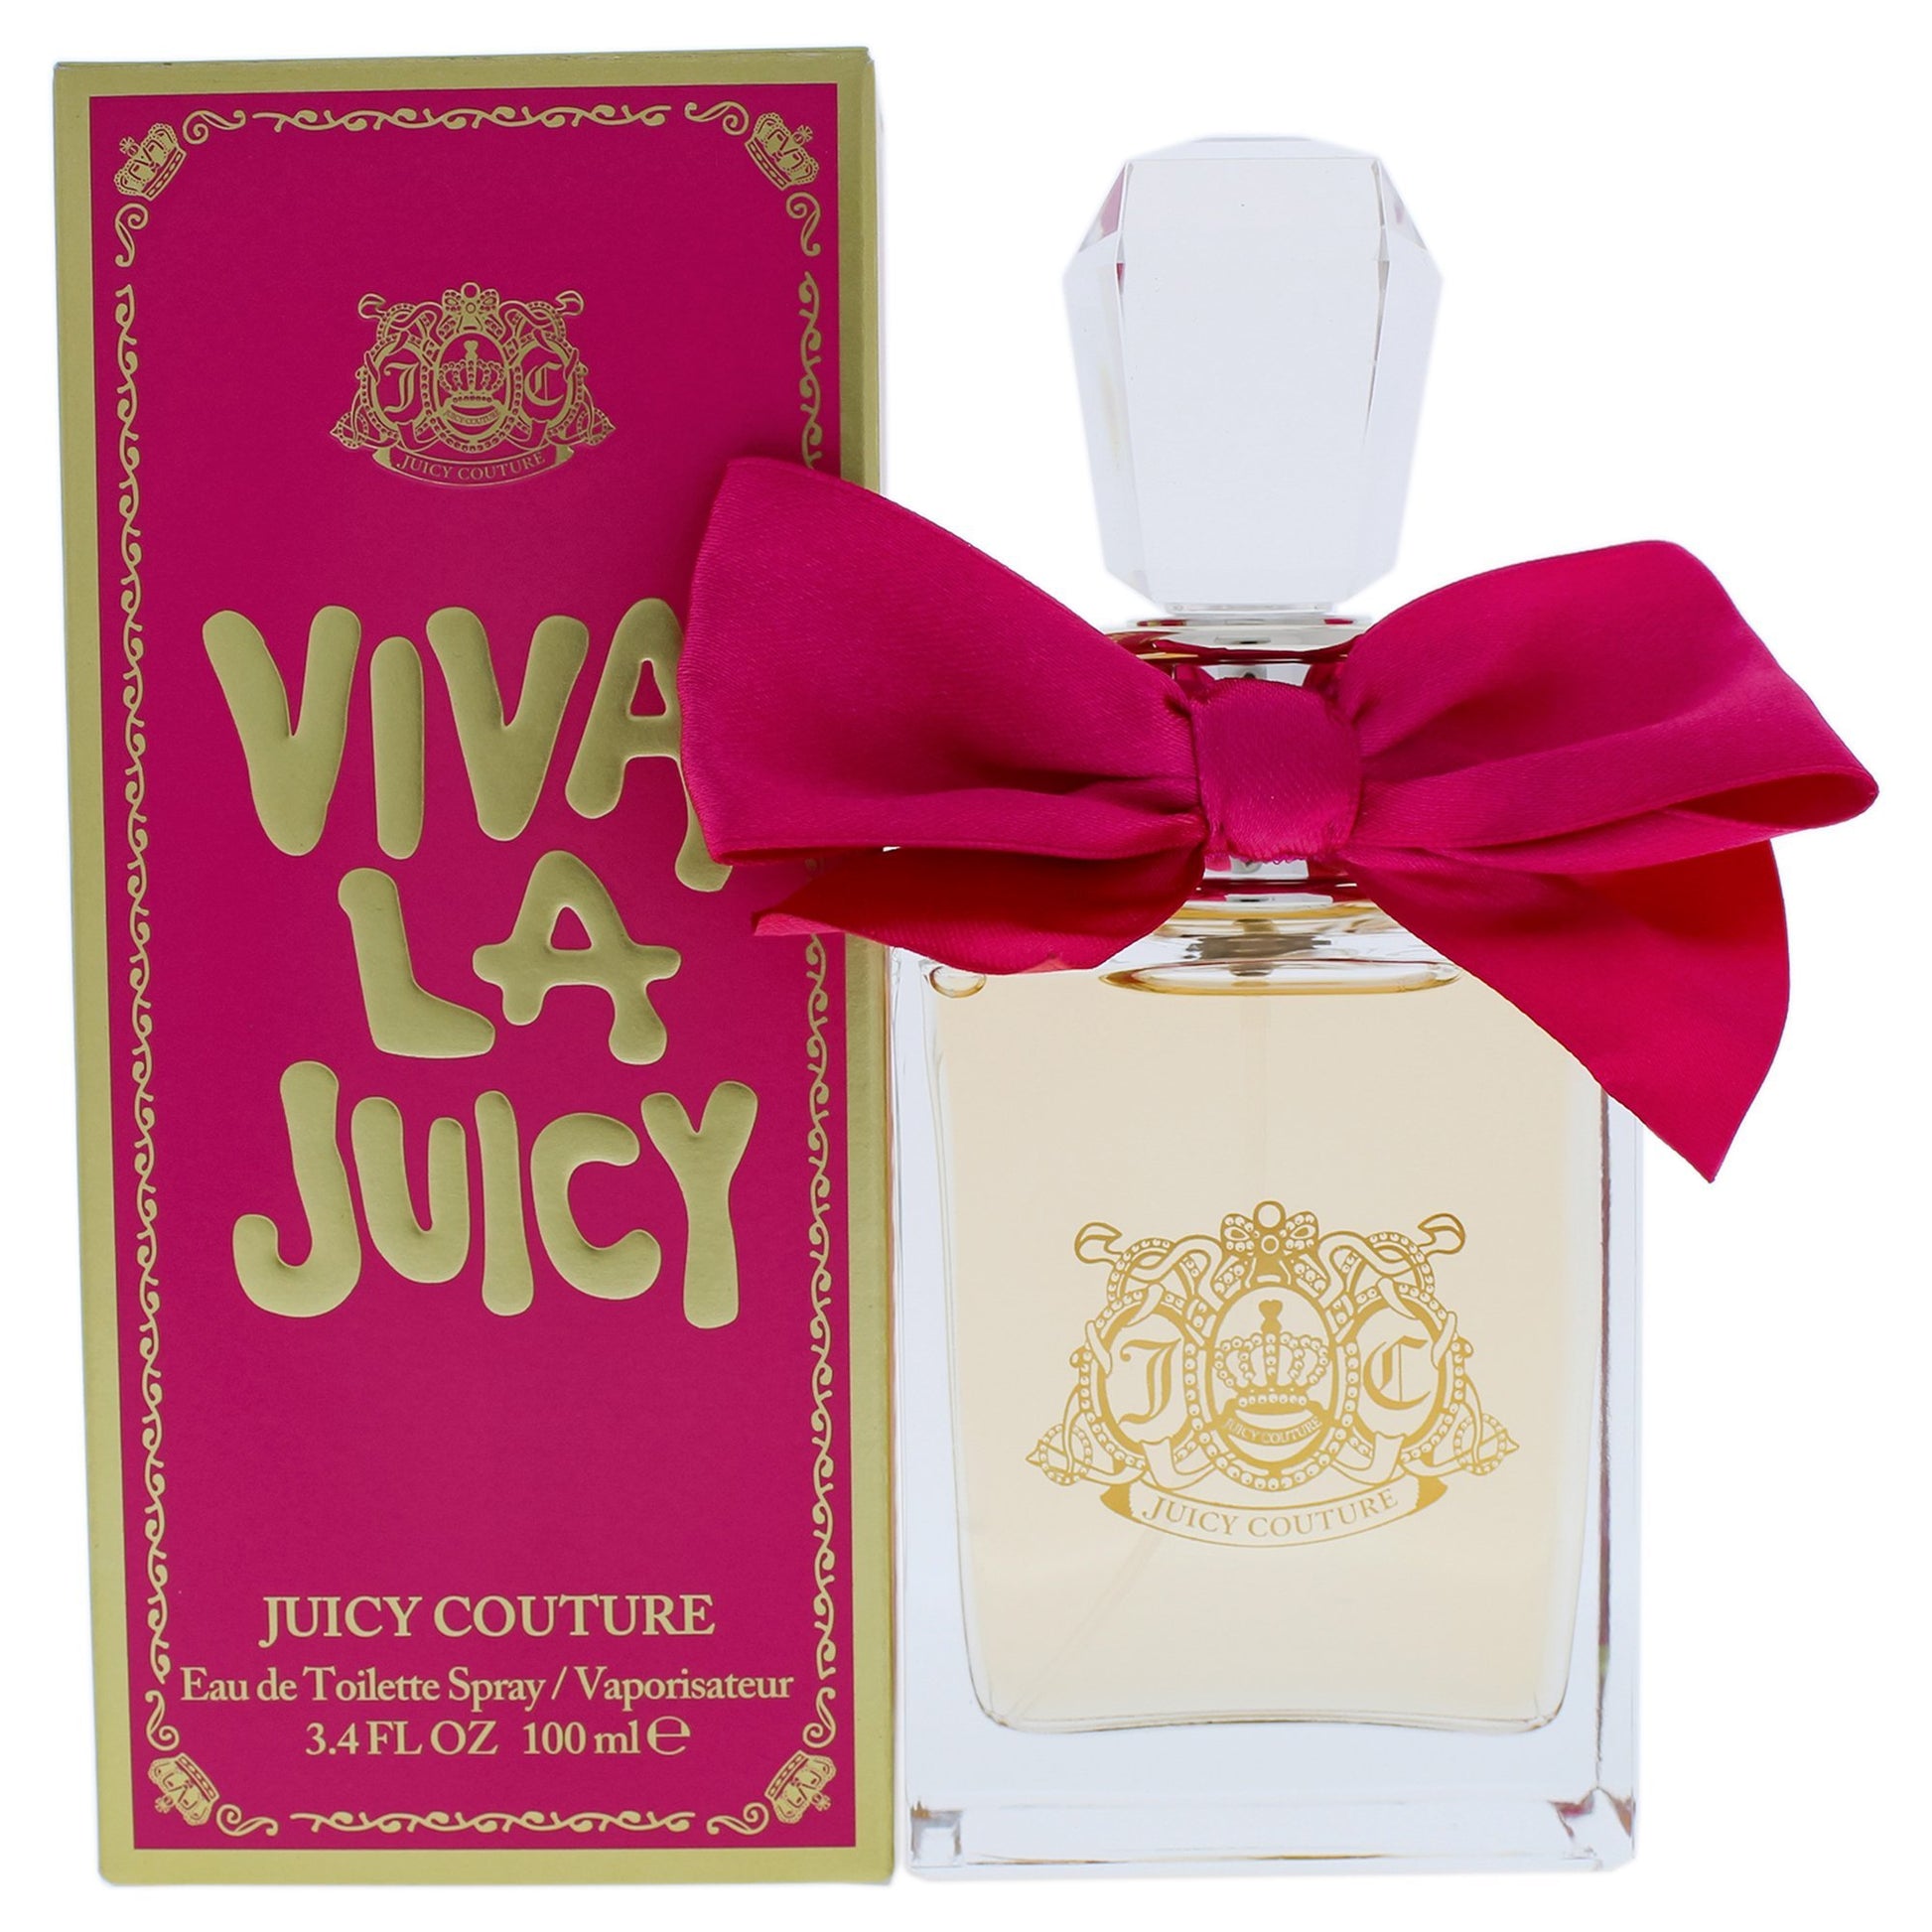 Juicy Couture Viva La Juicy Perfume for Women